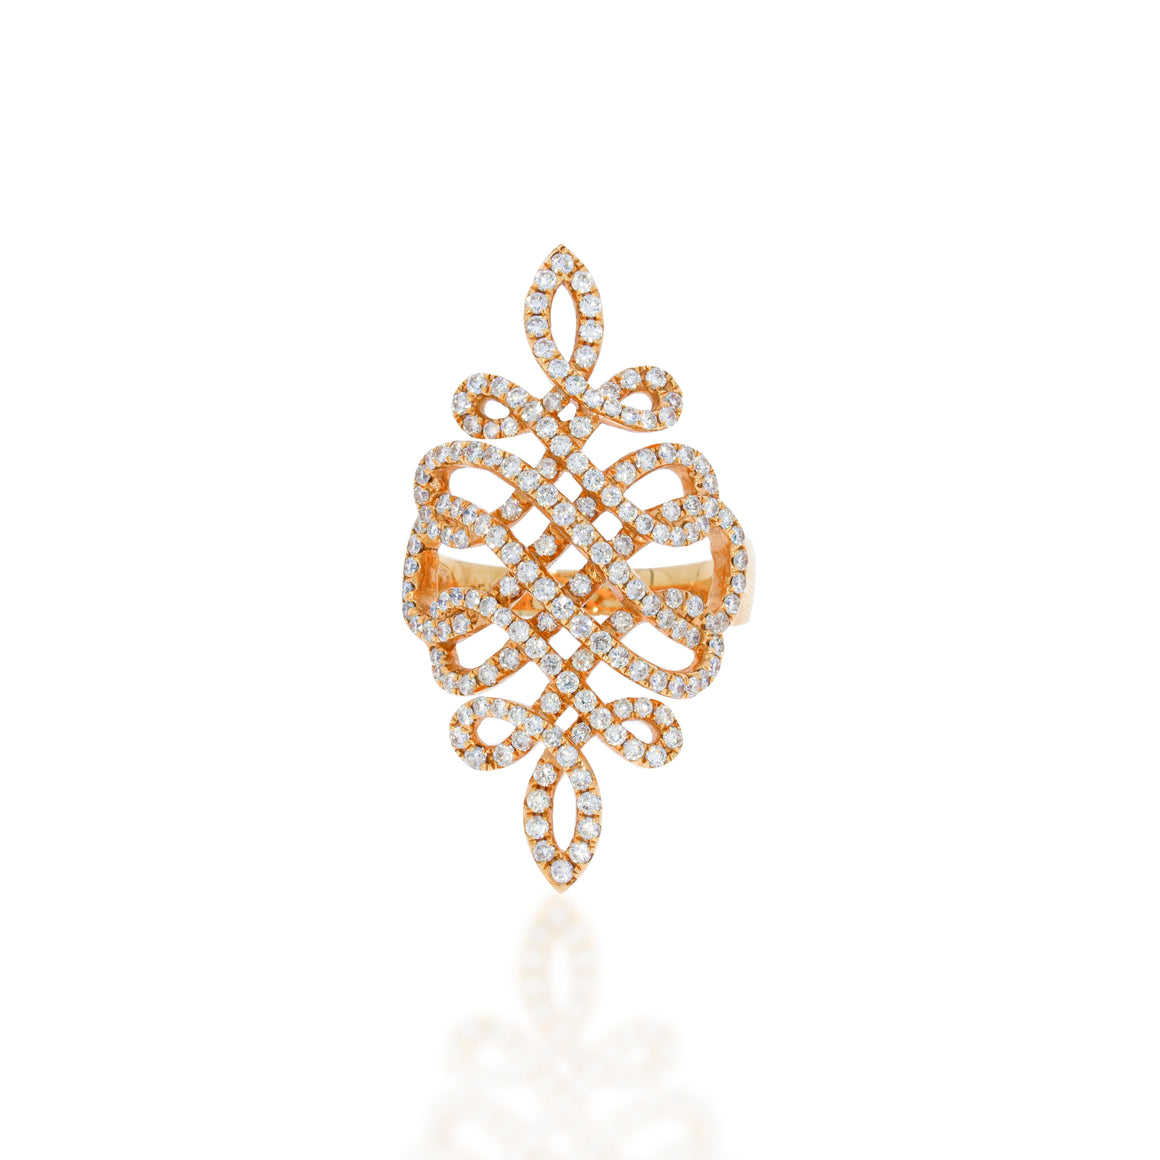 Diamond filigree long ring. Art Deco Statement ring. 18k Rose gold set with 1.24cart of round diamonds.